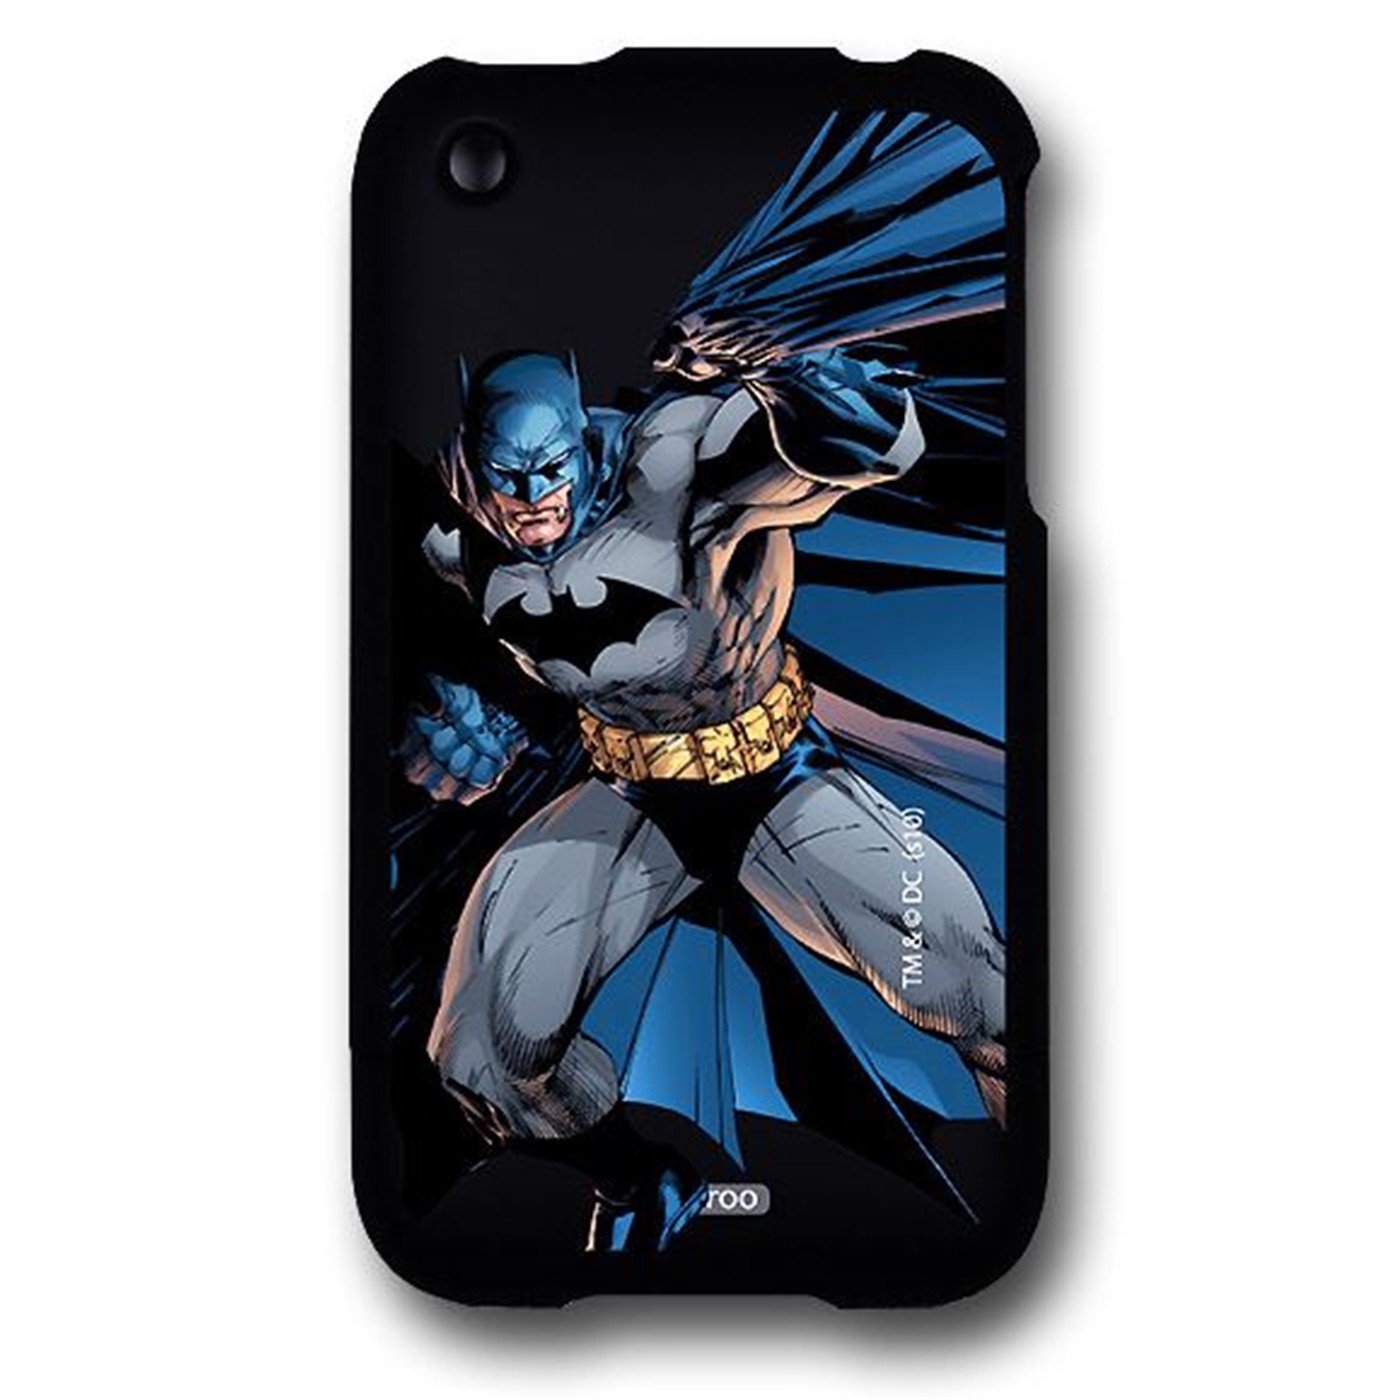 Batman Hero iPhone 3 Slider Case